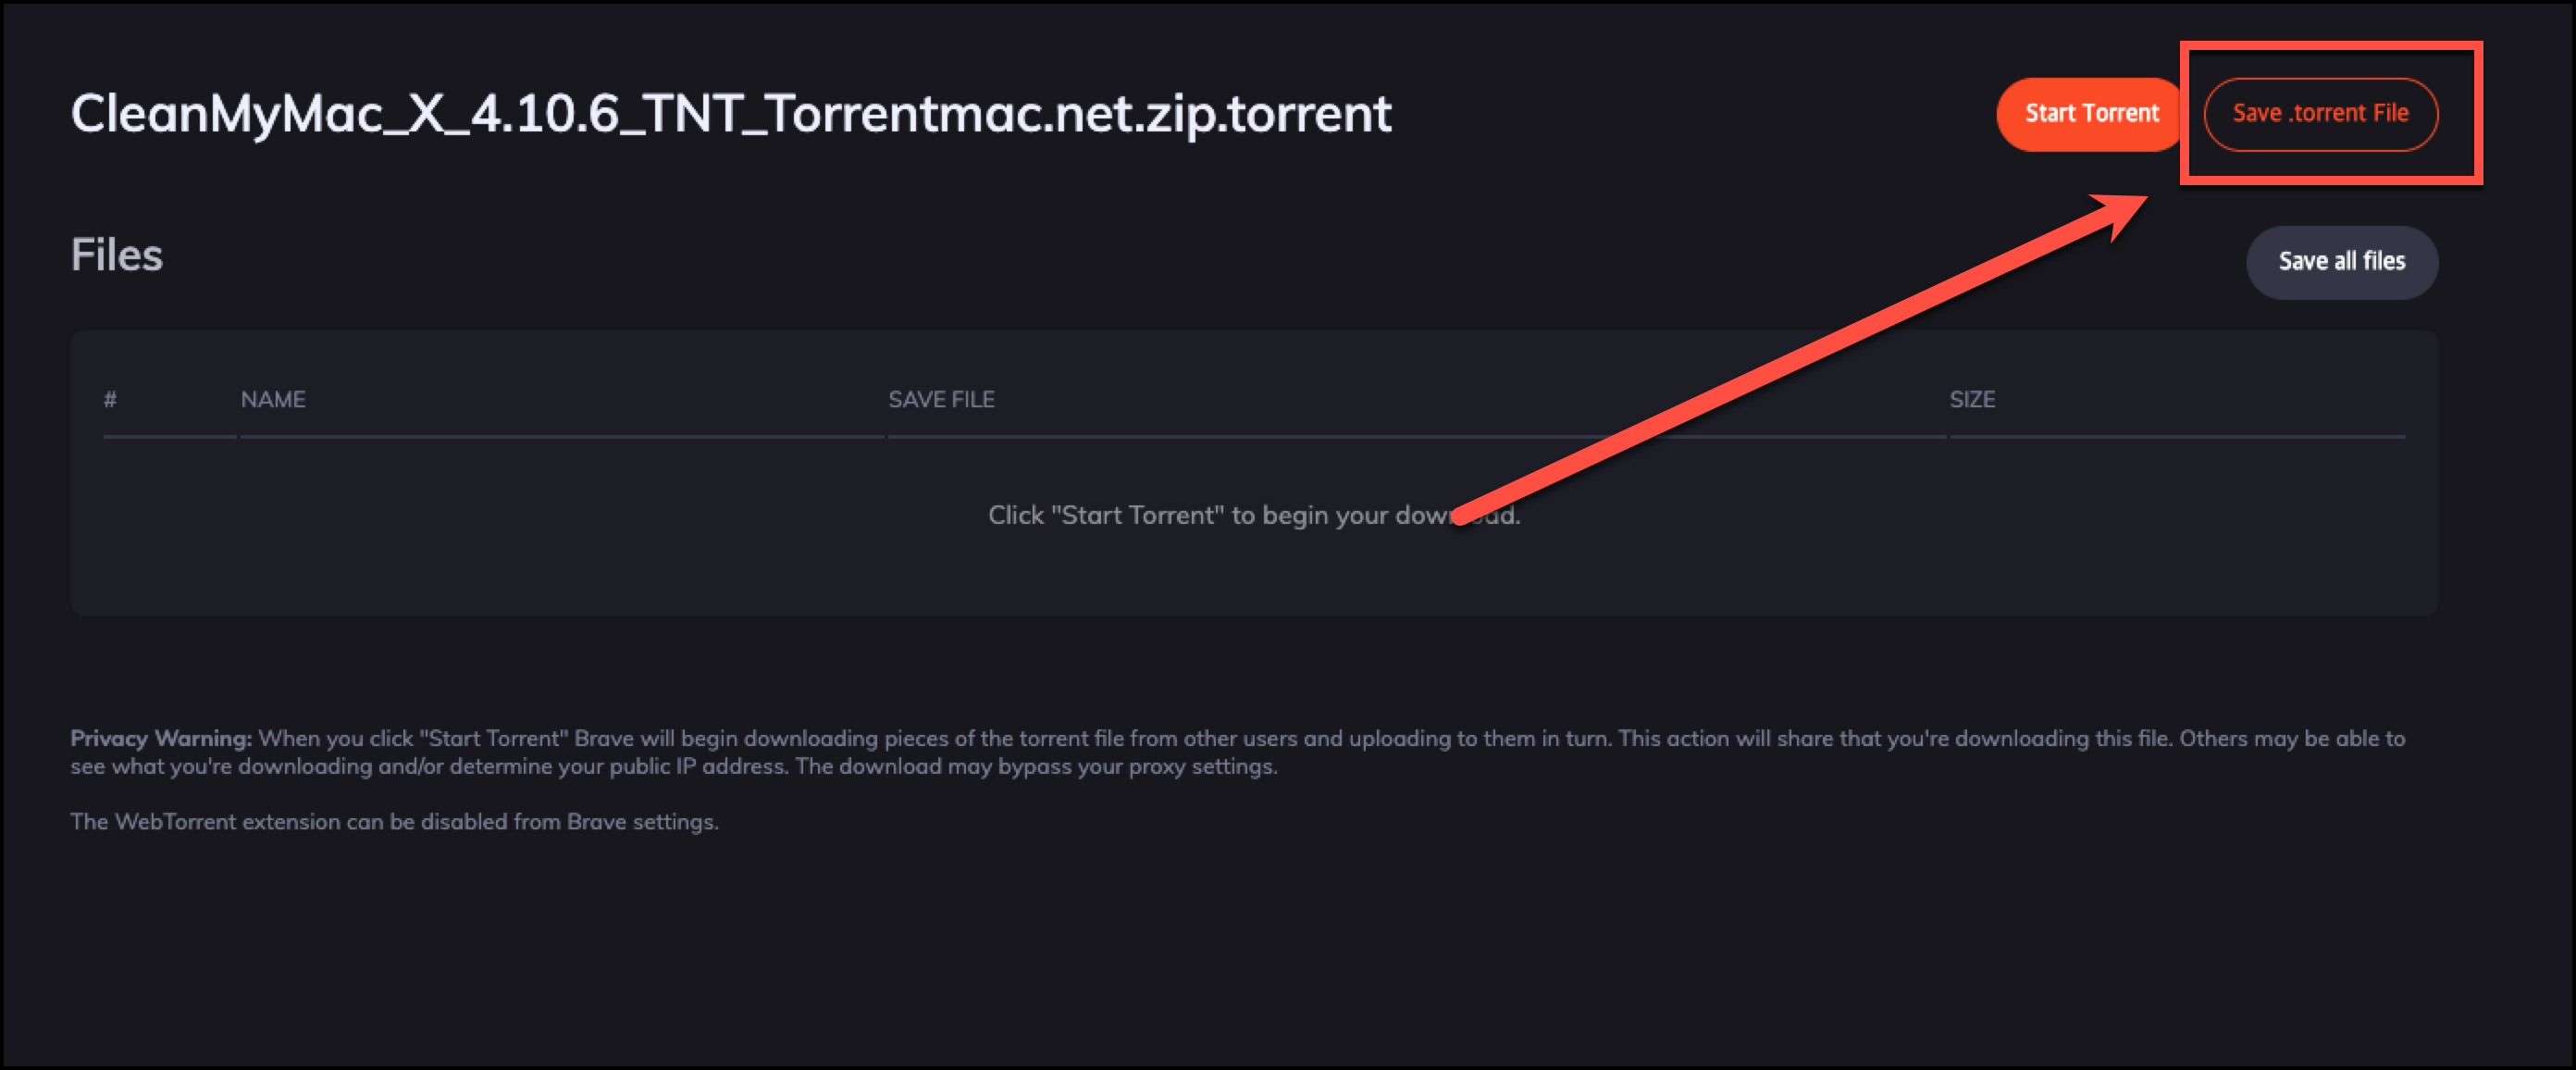 CleanMyMac torrent